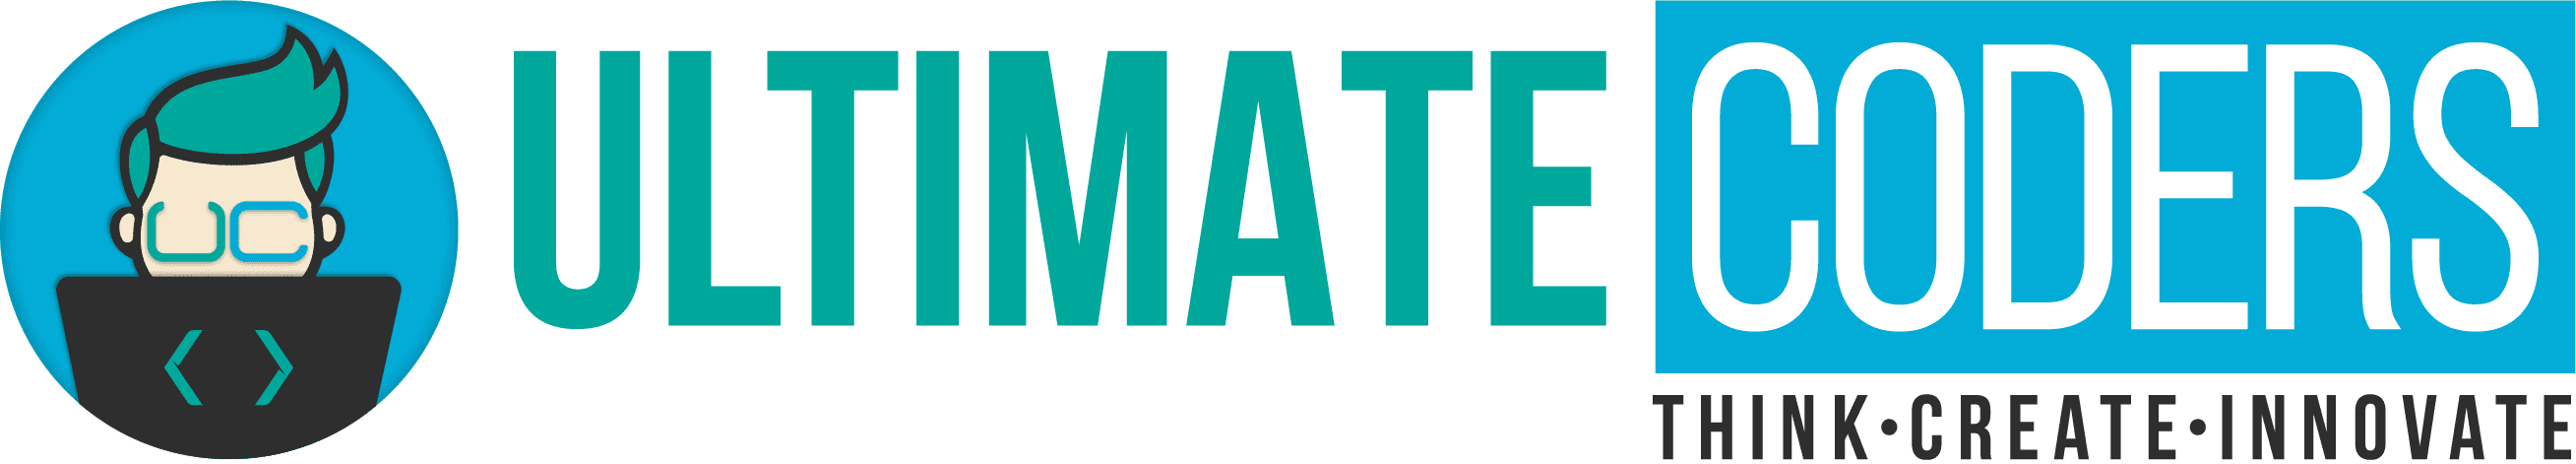 Ultimate Coders Logo